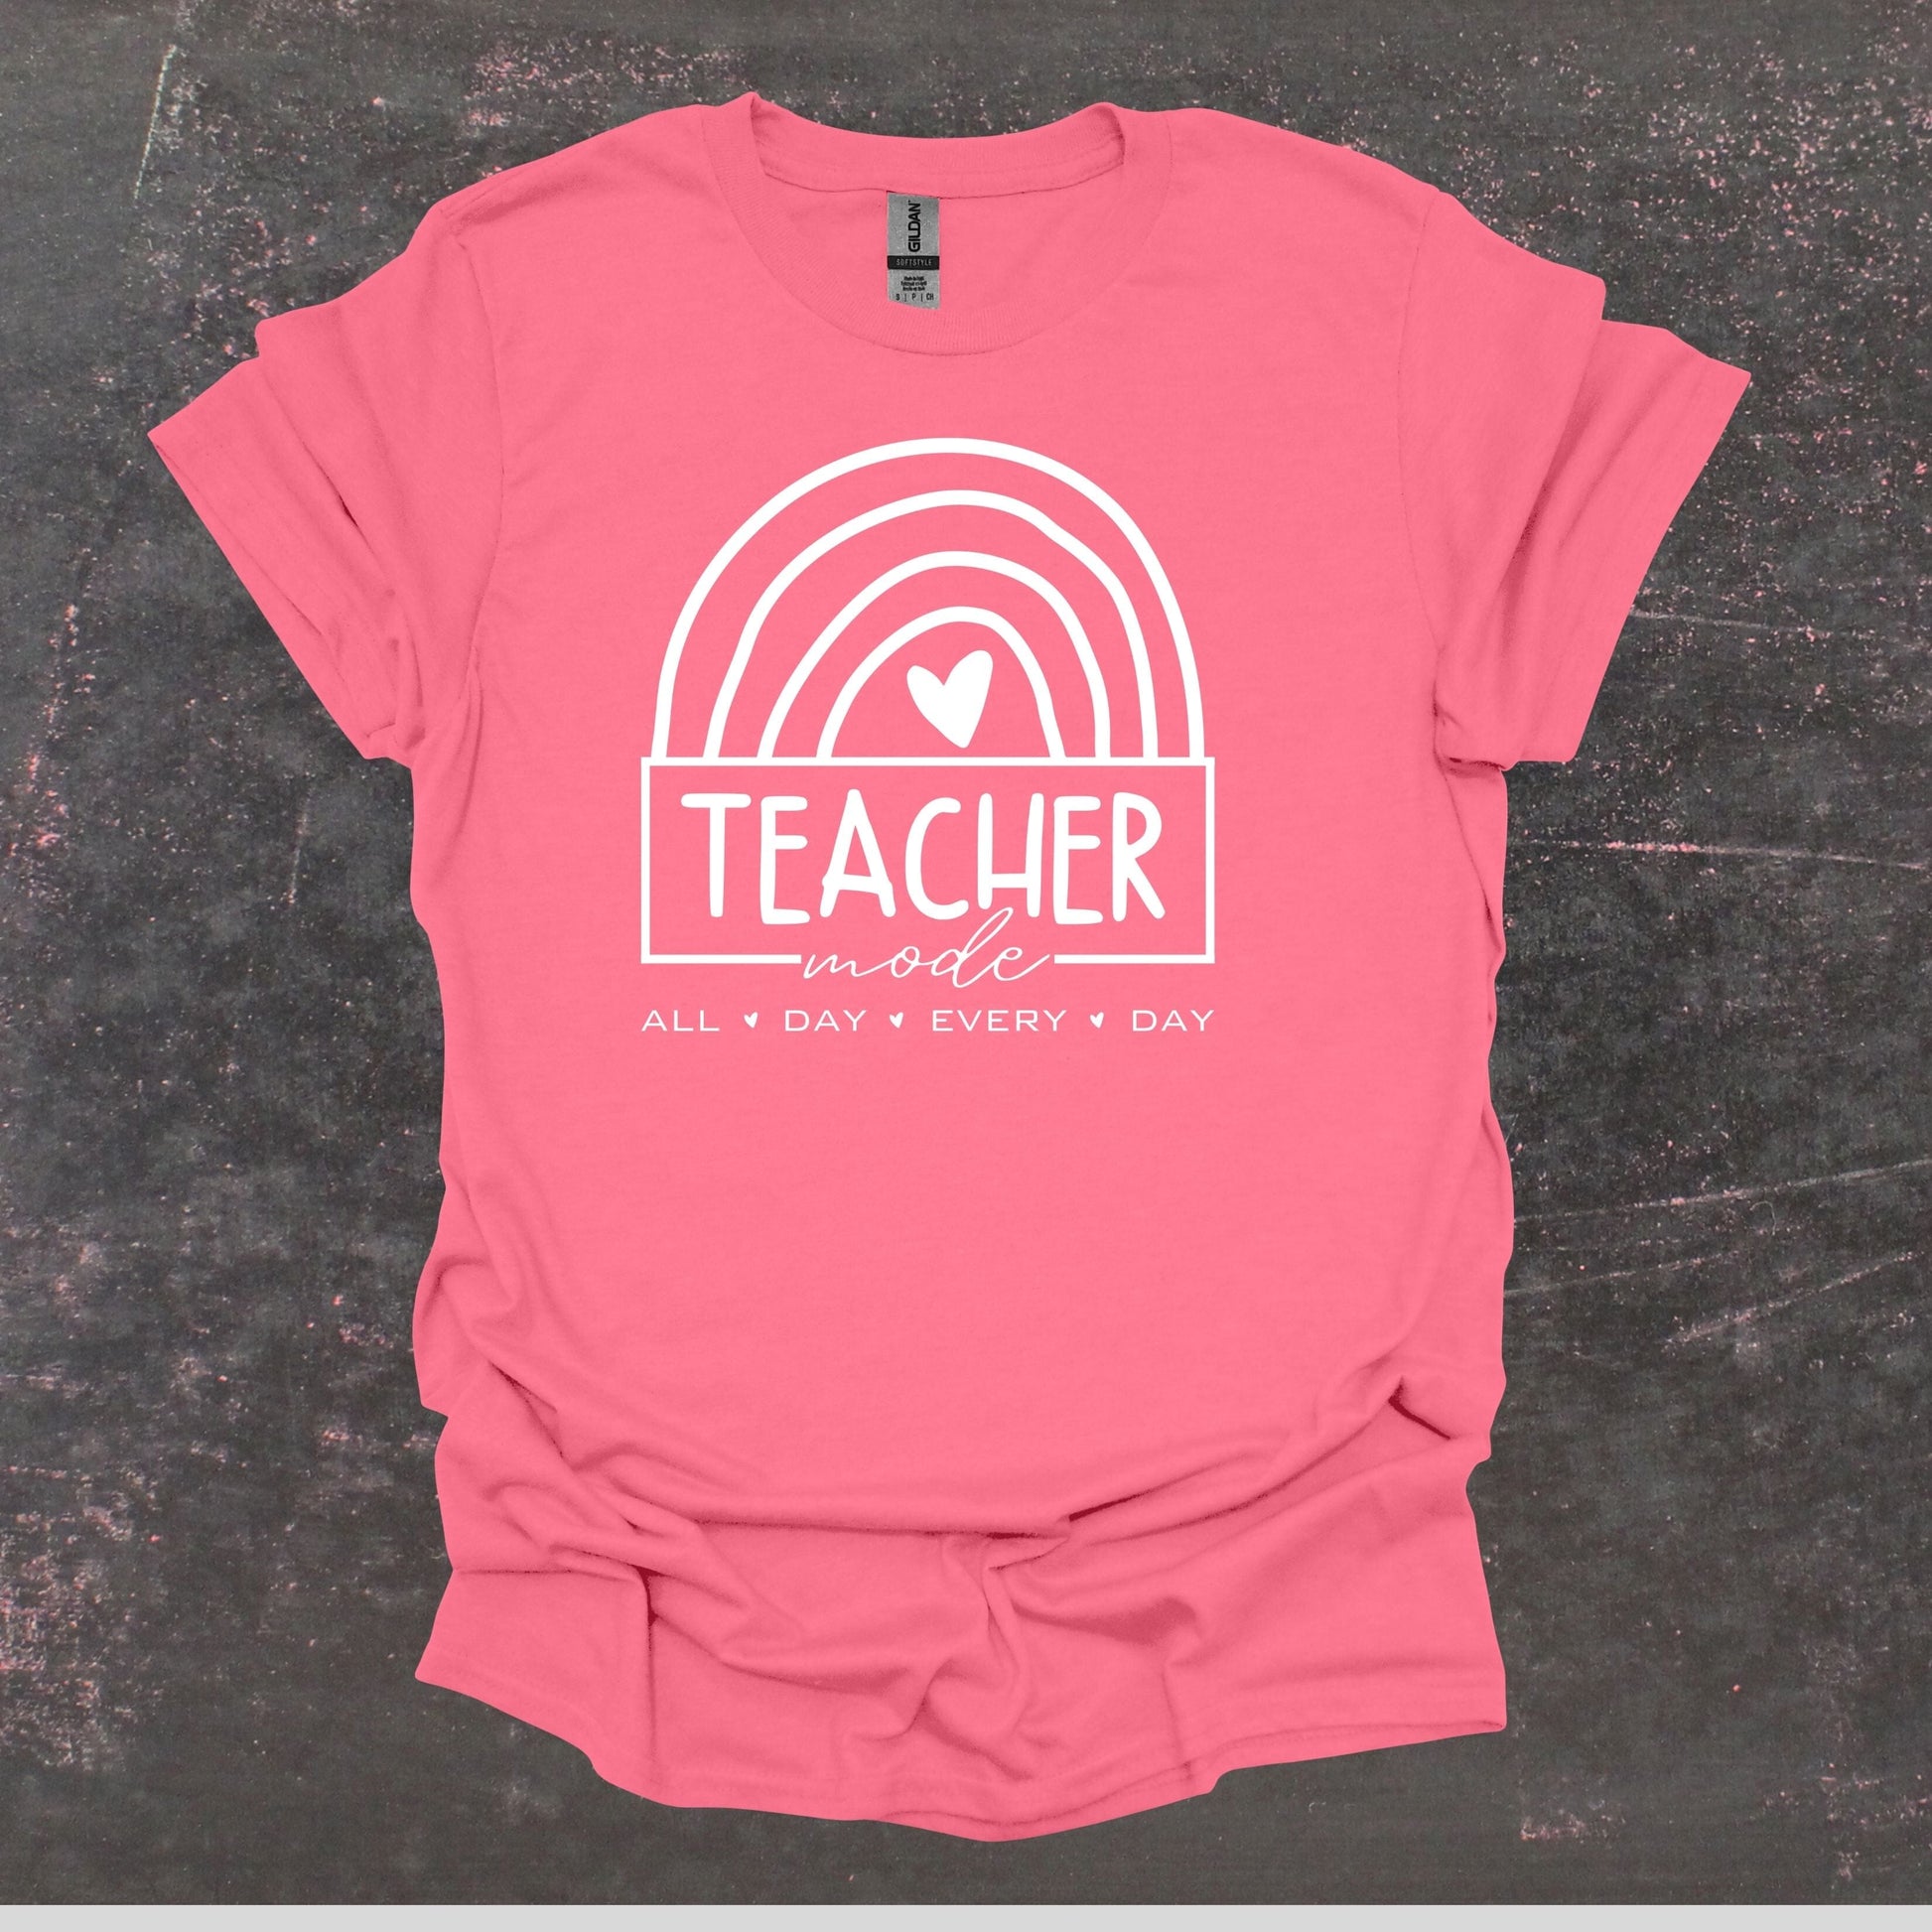 Teacher Mode - Teacher T Shirt - Adult Tee Shirts T-Shirts Graphic Avenue Coral Silk Adult Small 